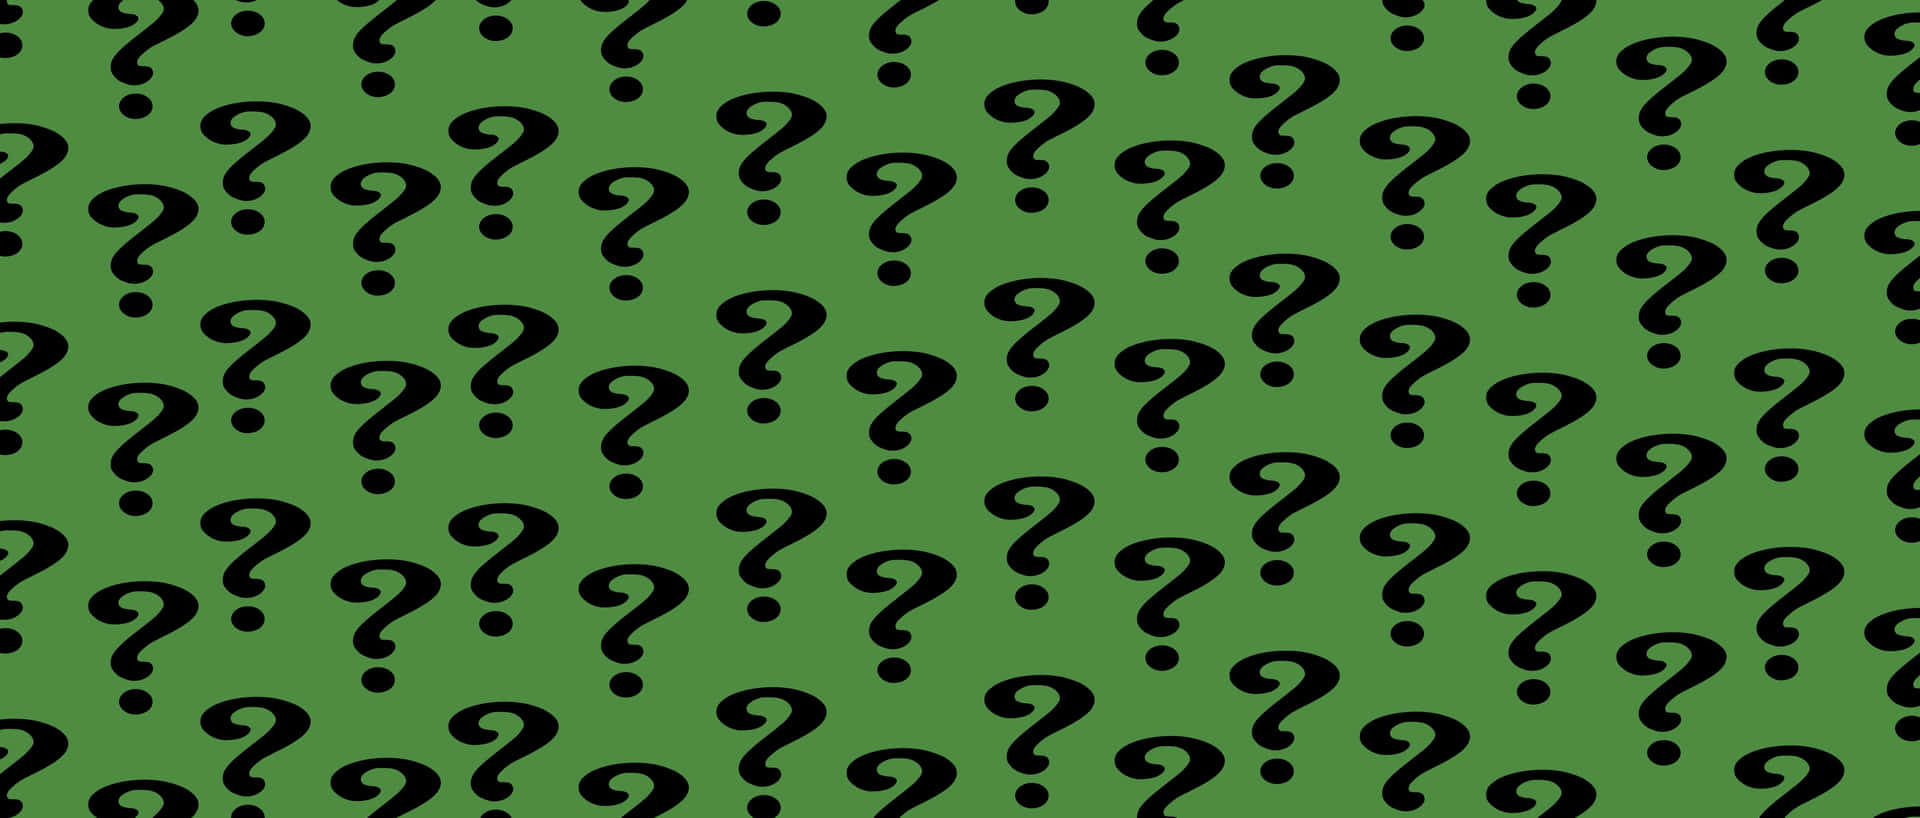 Question Mark Pattern Green Background Wallpaper